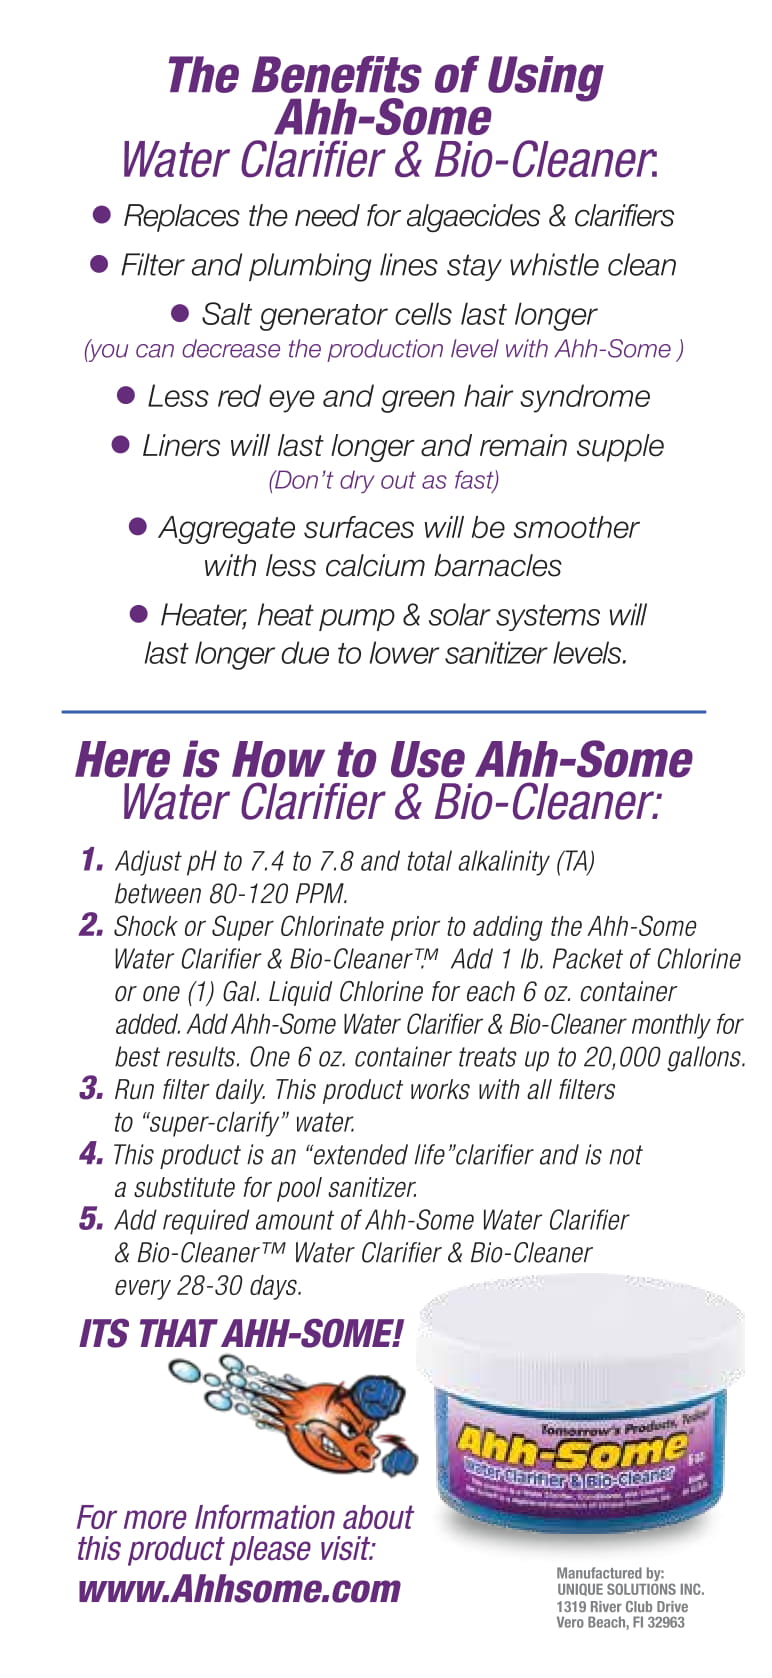 AHH-Some Pool Bio-Cleaner & Clarifier 6oz. - Macke Pool Products